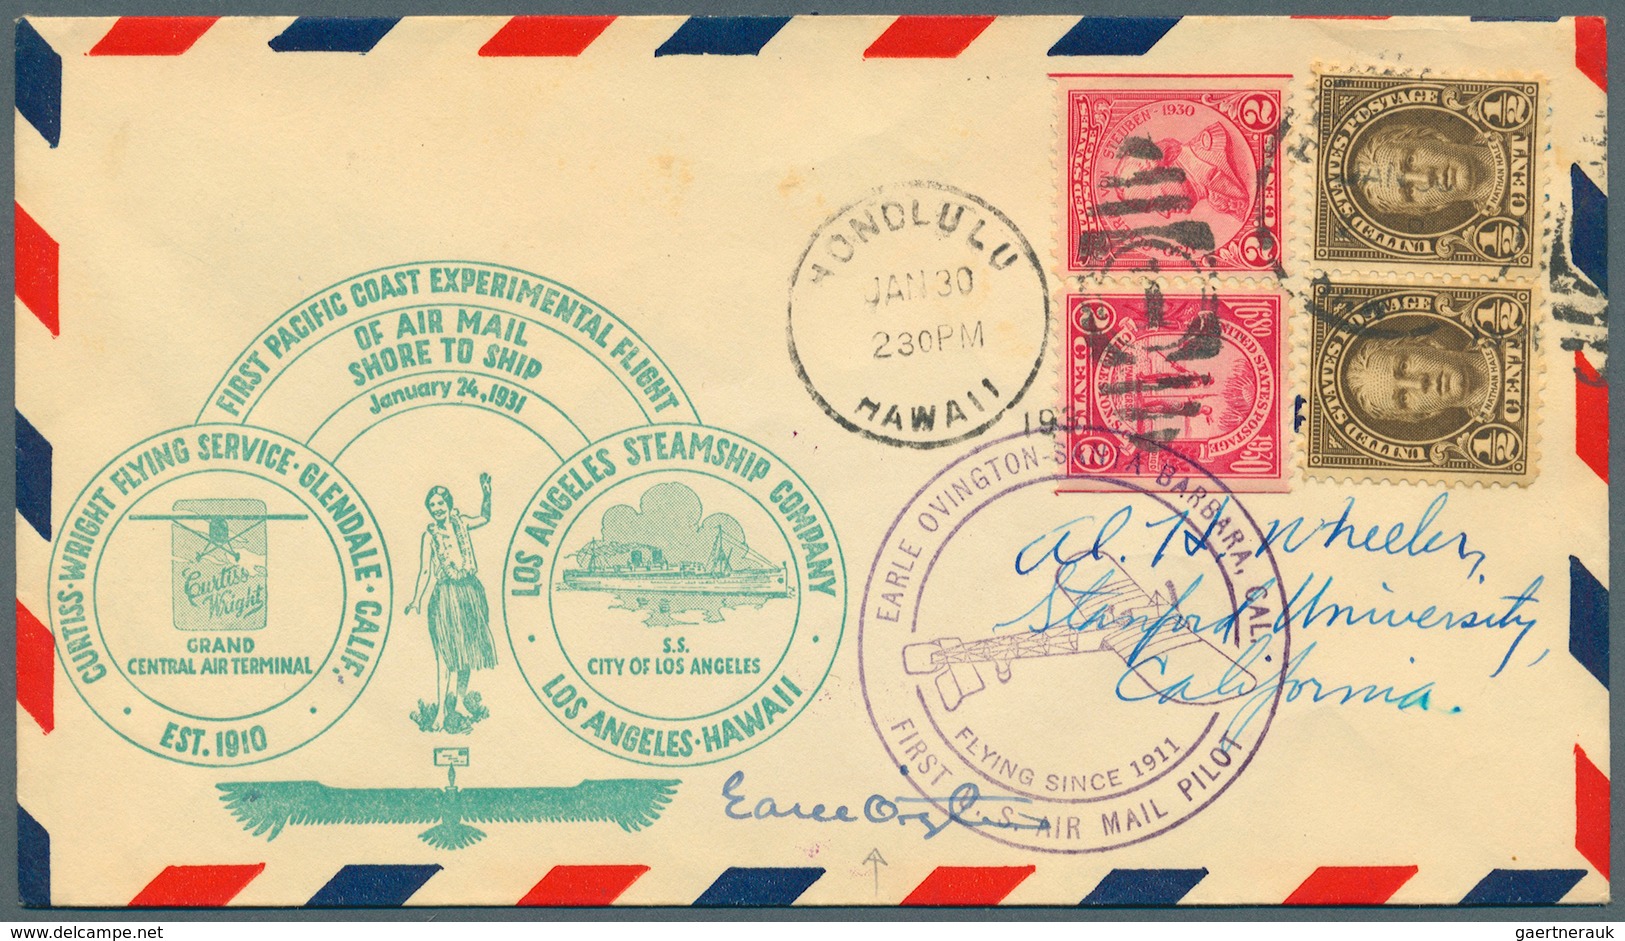 Flugpost Übersee: Ab 1923: 79 frühe Flugbelege, einige nach Afrika, viele dekorative Erstflugbelege,